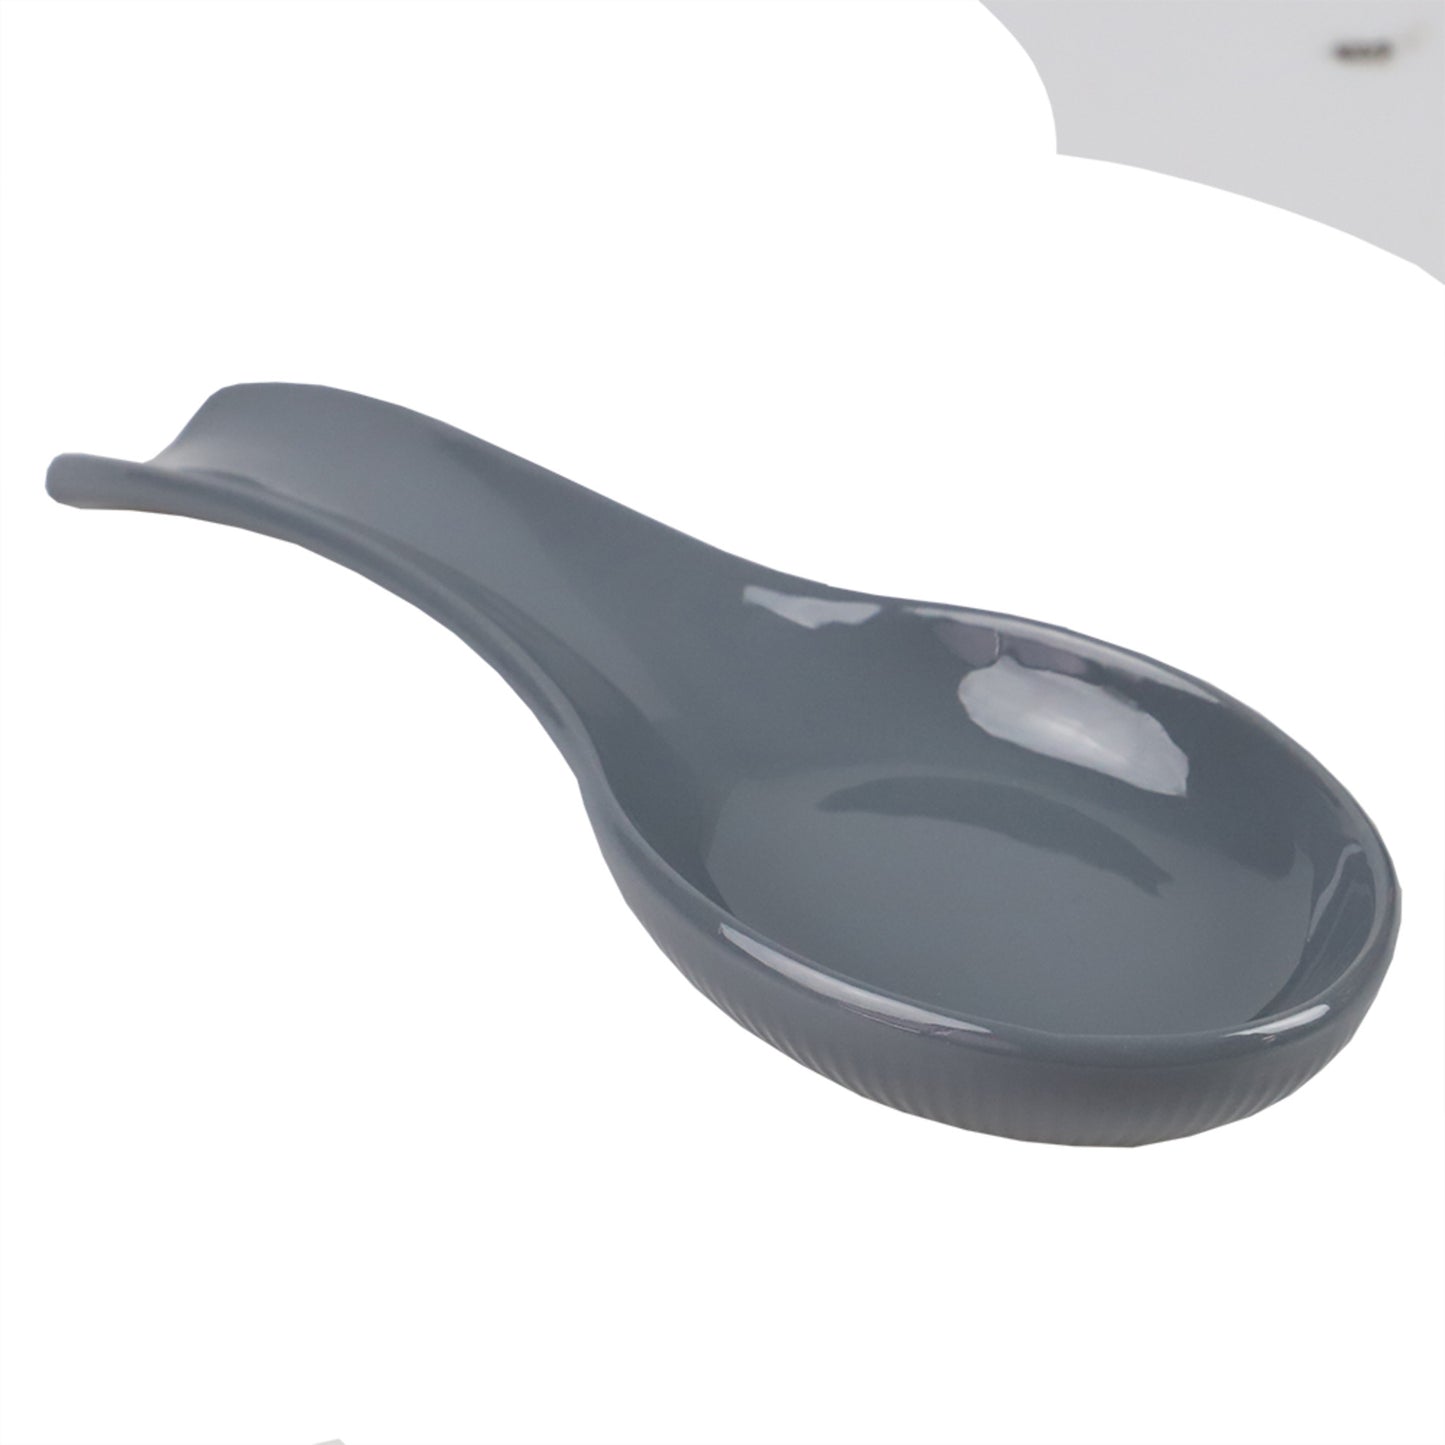 Home Basics 9.75" x 3.5" Ceramic Spoon Rest, Grey - Grey